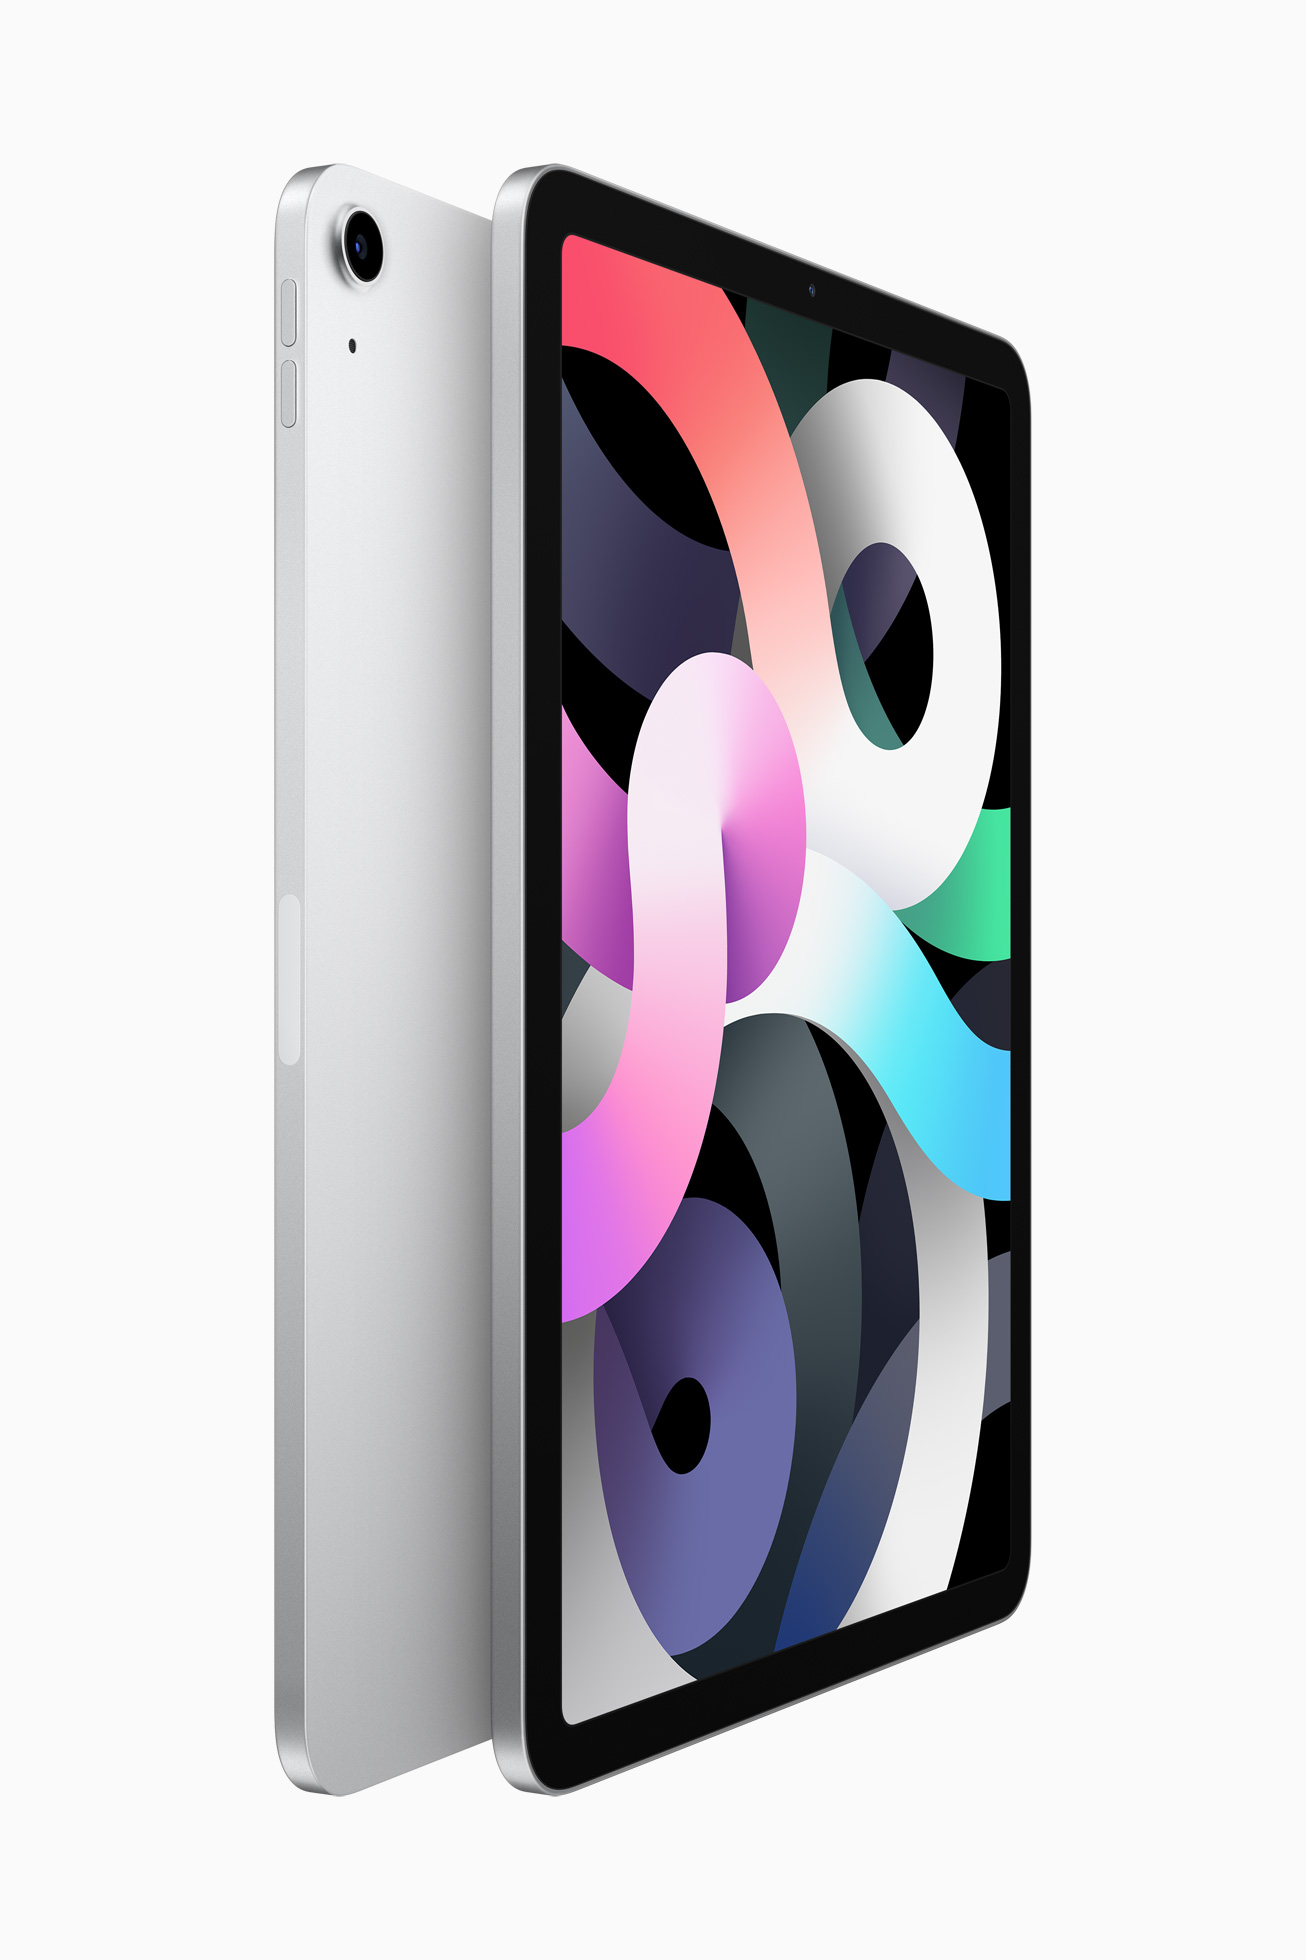 iPad Air 4 來了！A14 晶片、全螢幕設計和指紋電源鍵 | A14, iPad Air, iPad Air 4, Touch ID, USB-C | iPhone News 愛瘋了